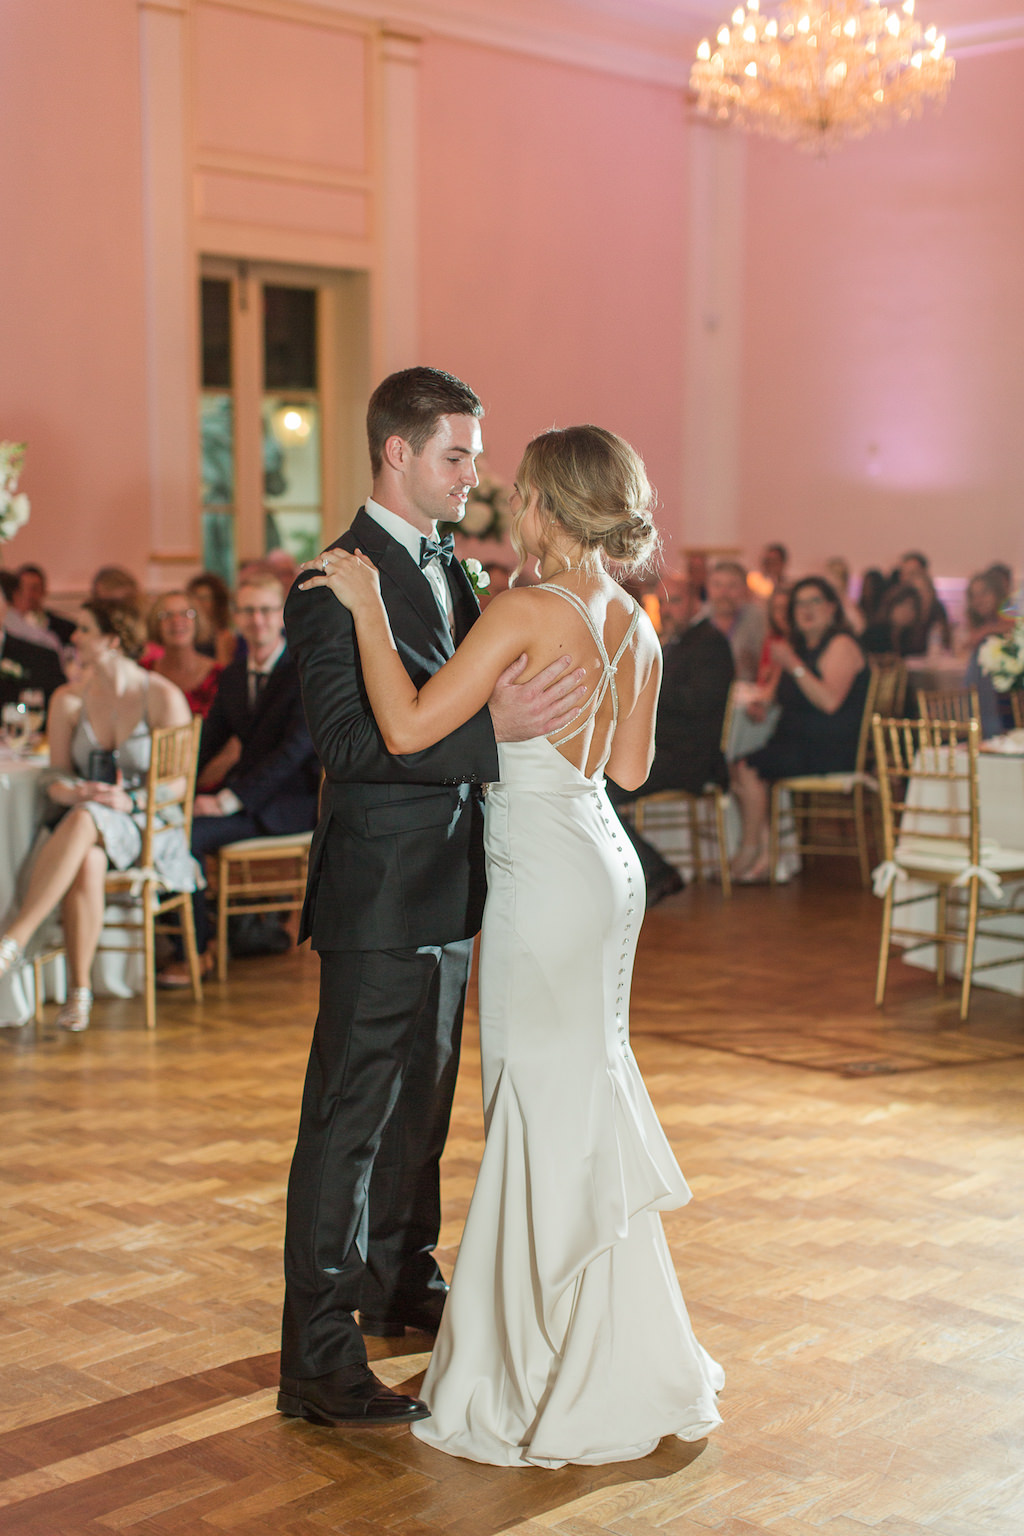 Classic Tampa Bay Bride and Groom First Dance Ballroom Wedding Reception